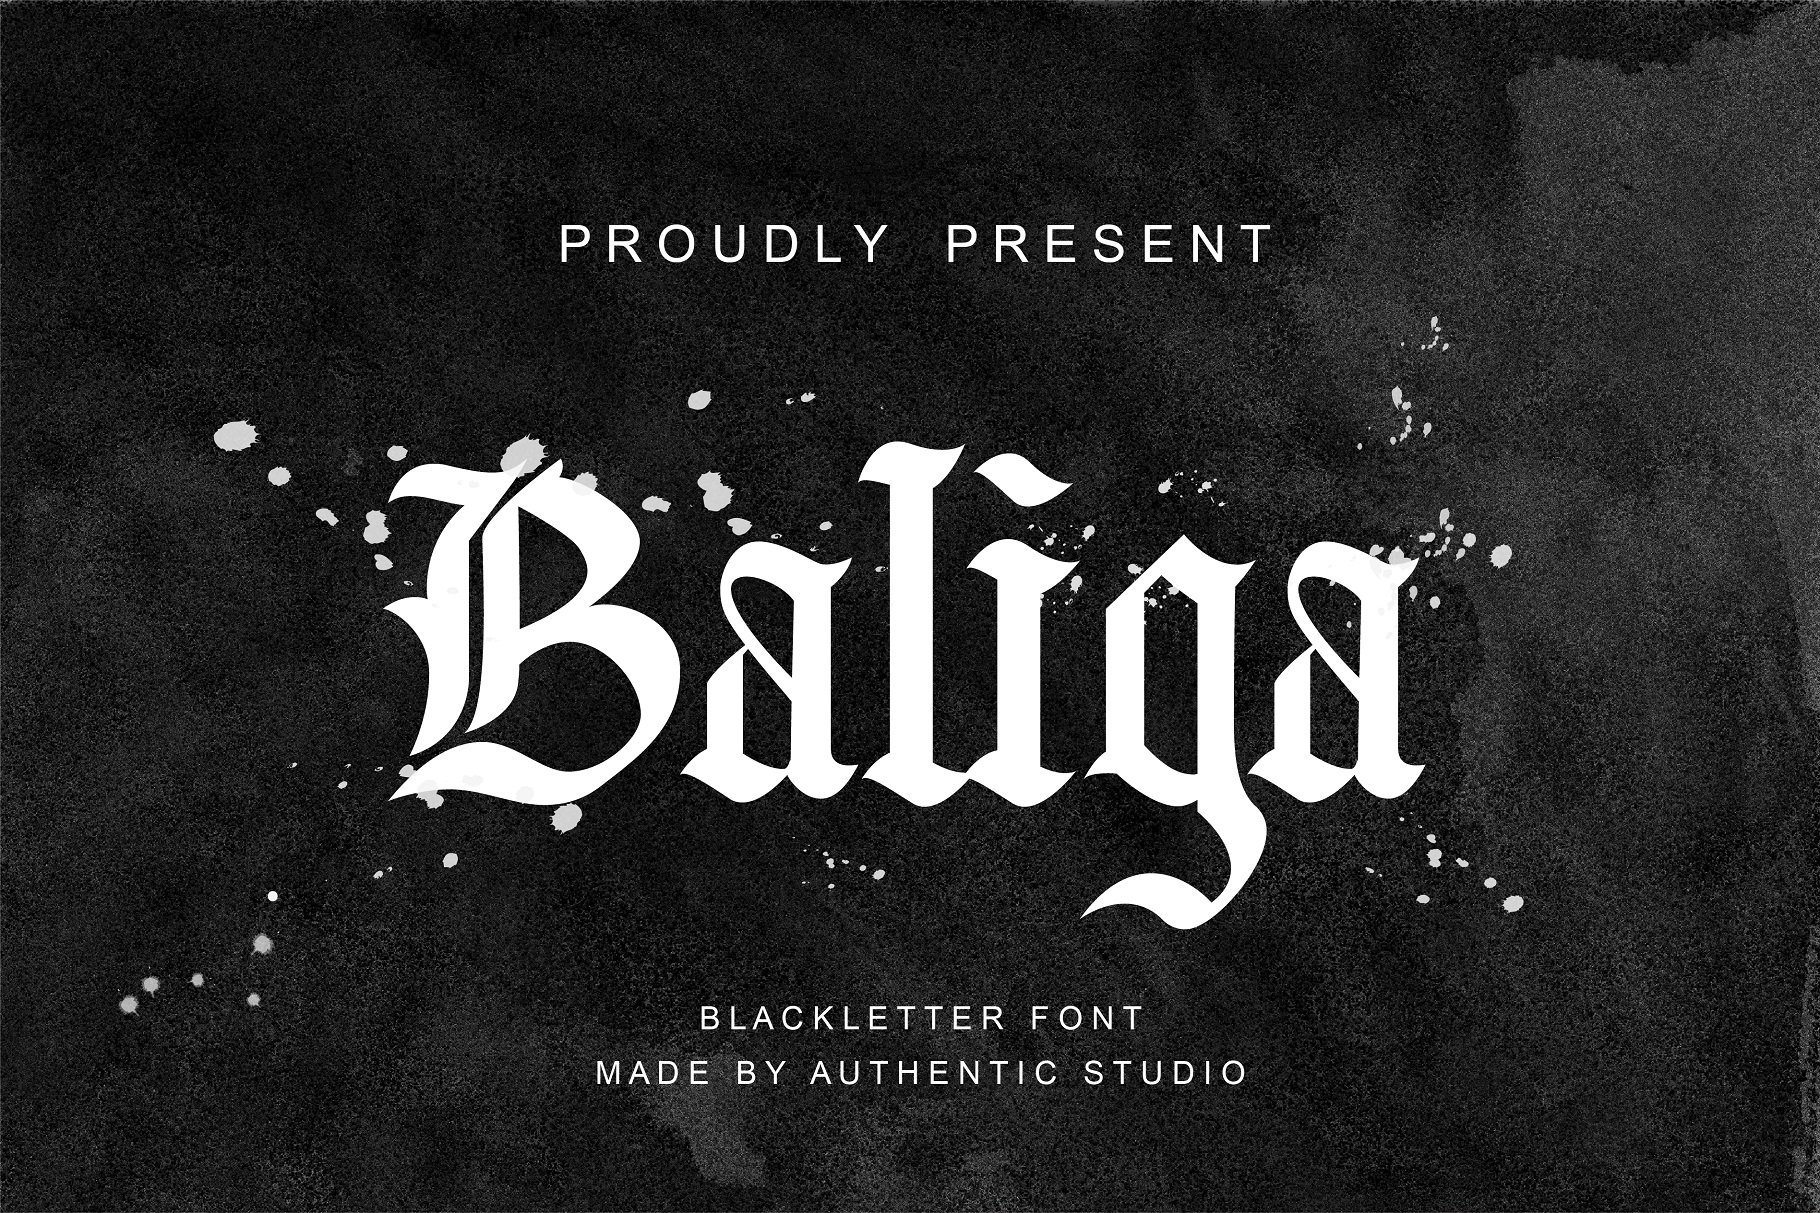 Baliga Blackletter cover image.